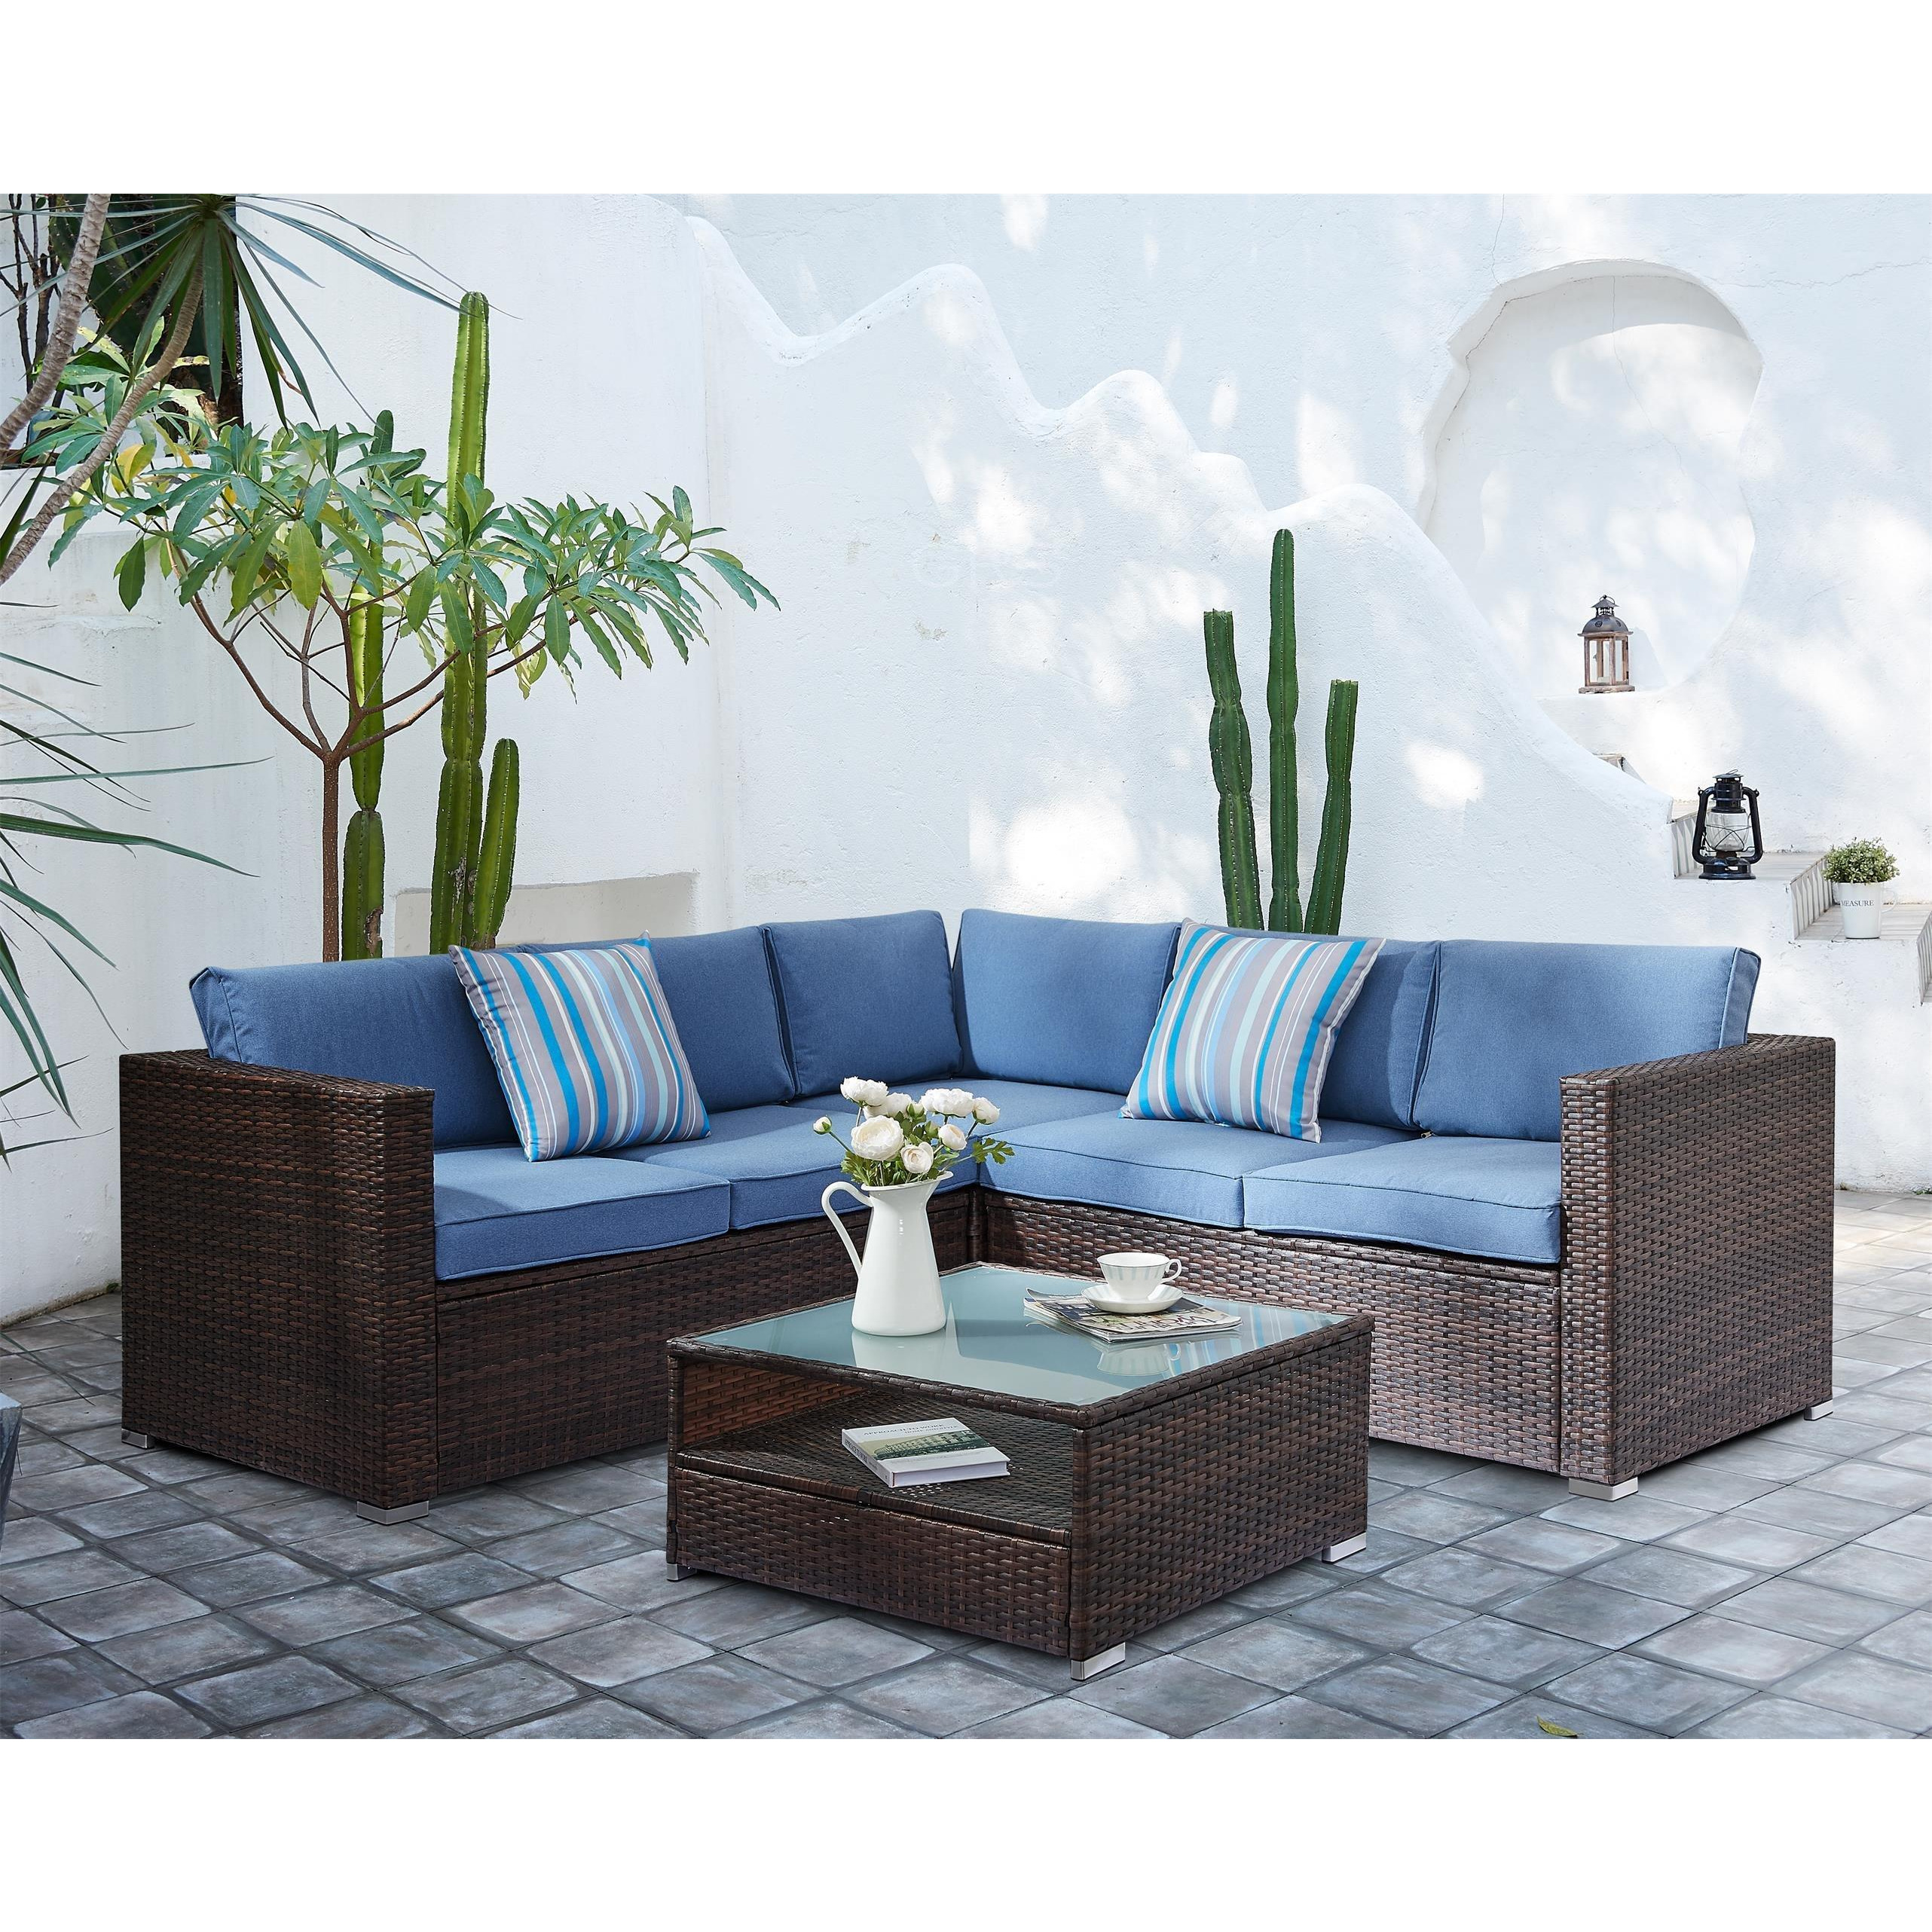 Medina 4 Piece Corner Brown Rattan Sofa Set L- Shaped Garden Furniture - image 1